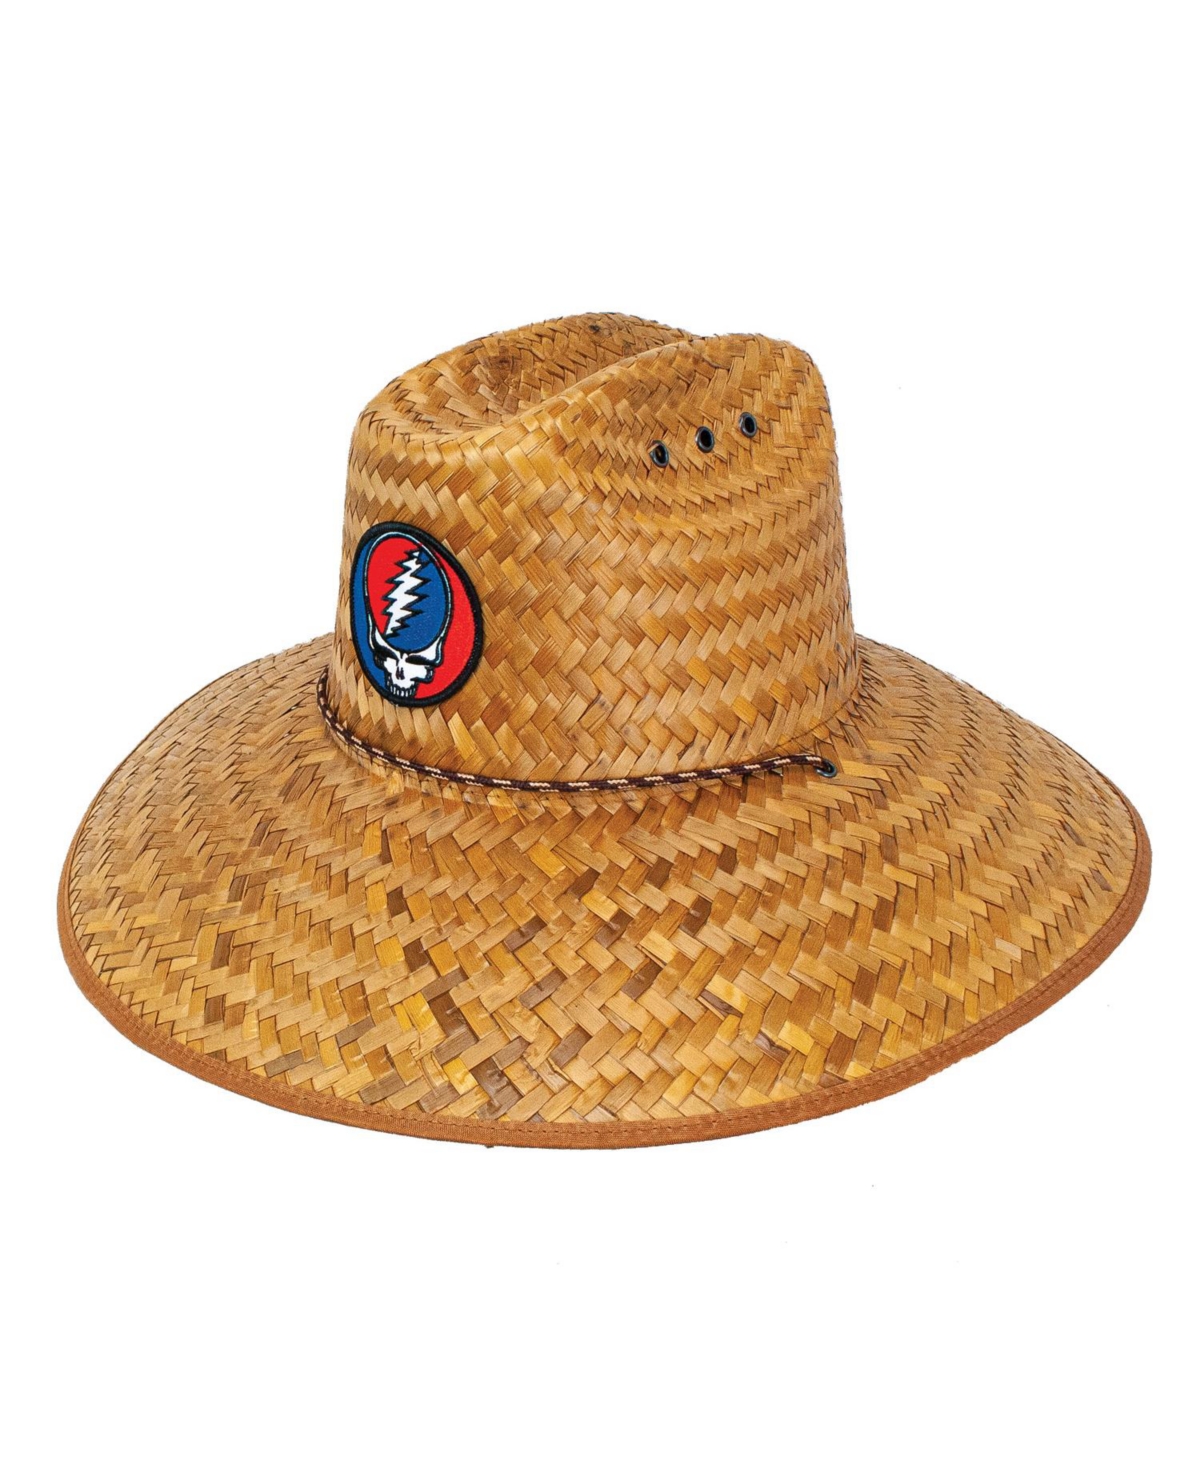 Syf Hasselhoff Grateful Dead Lifeguard Hat - Natural